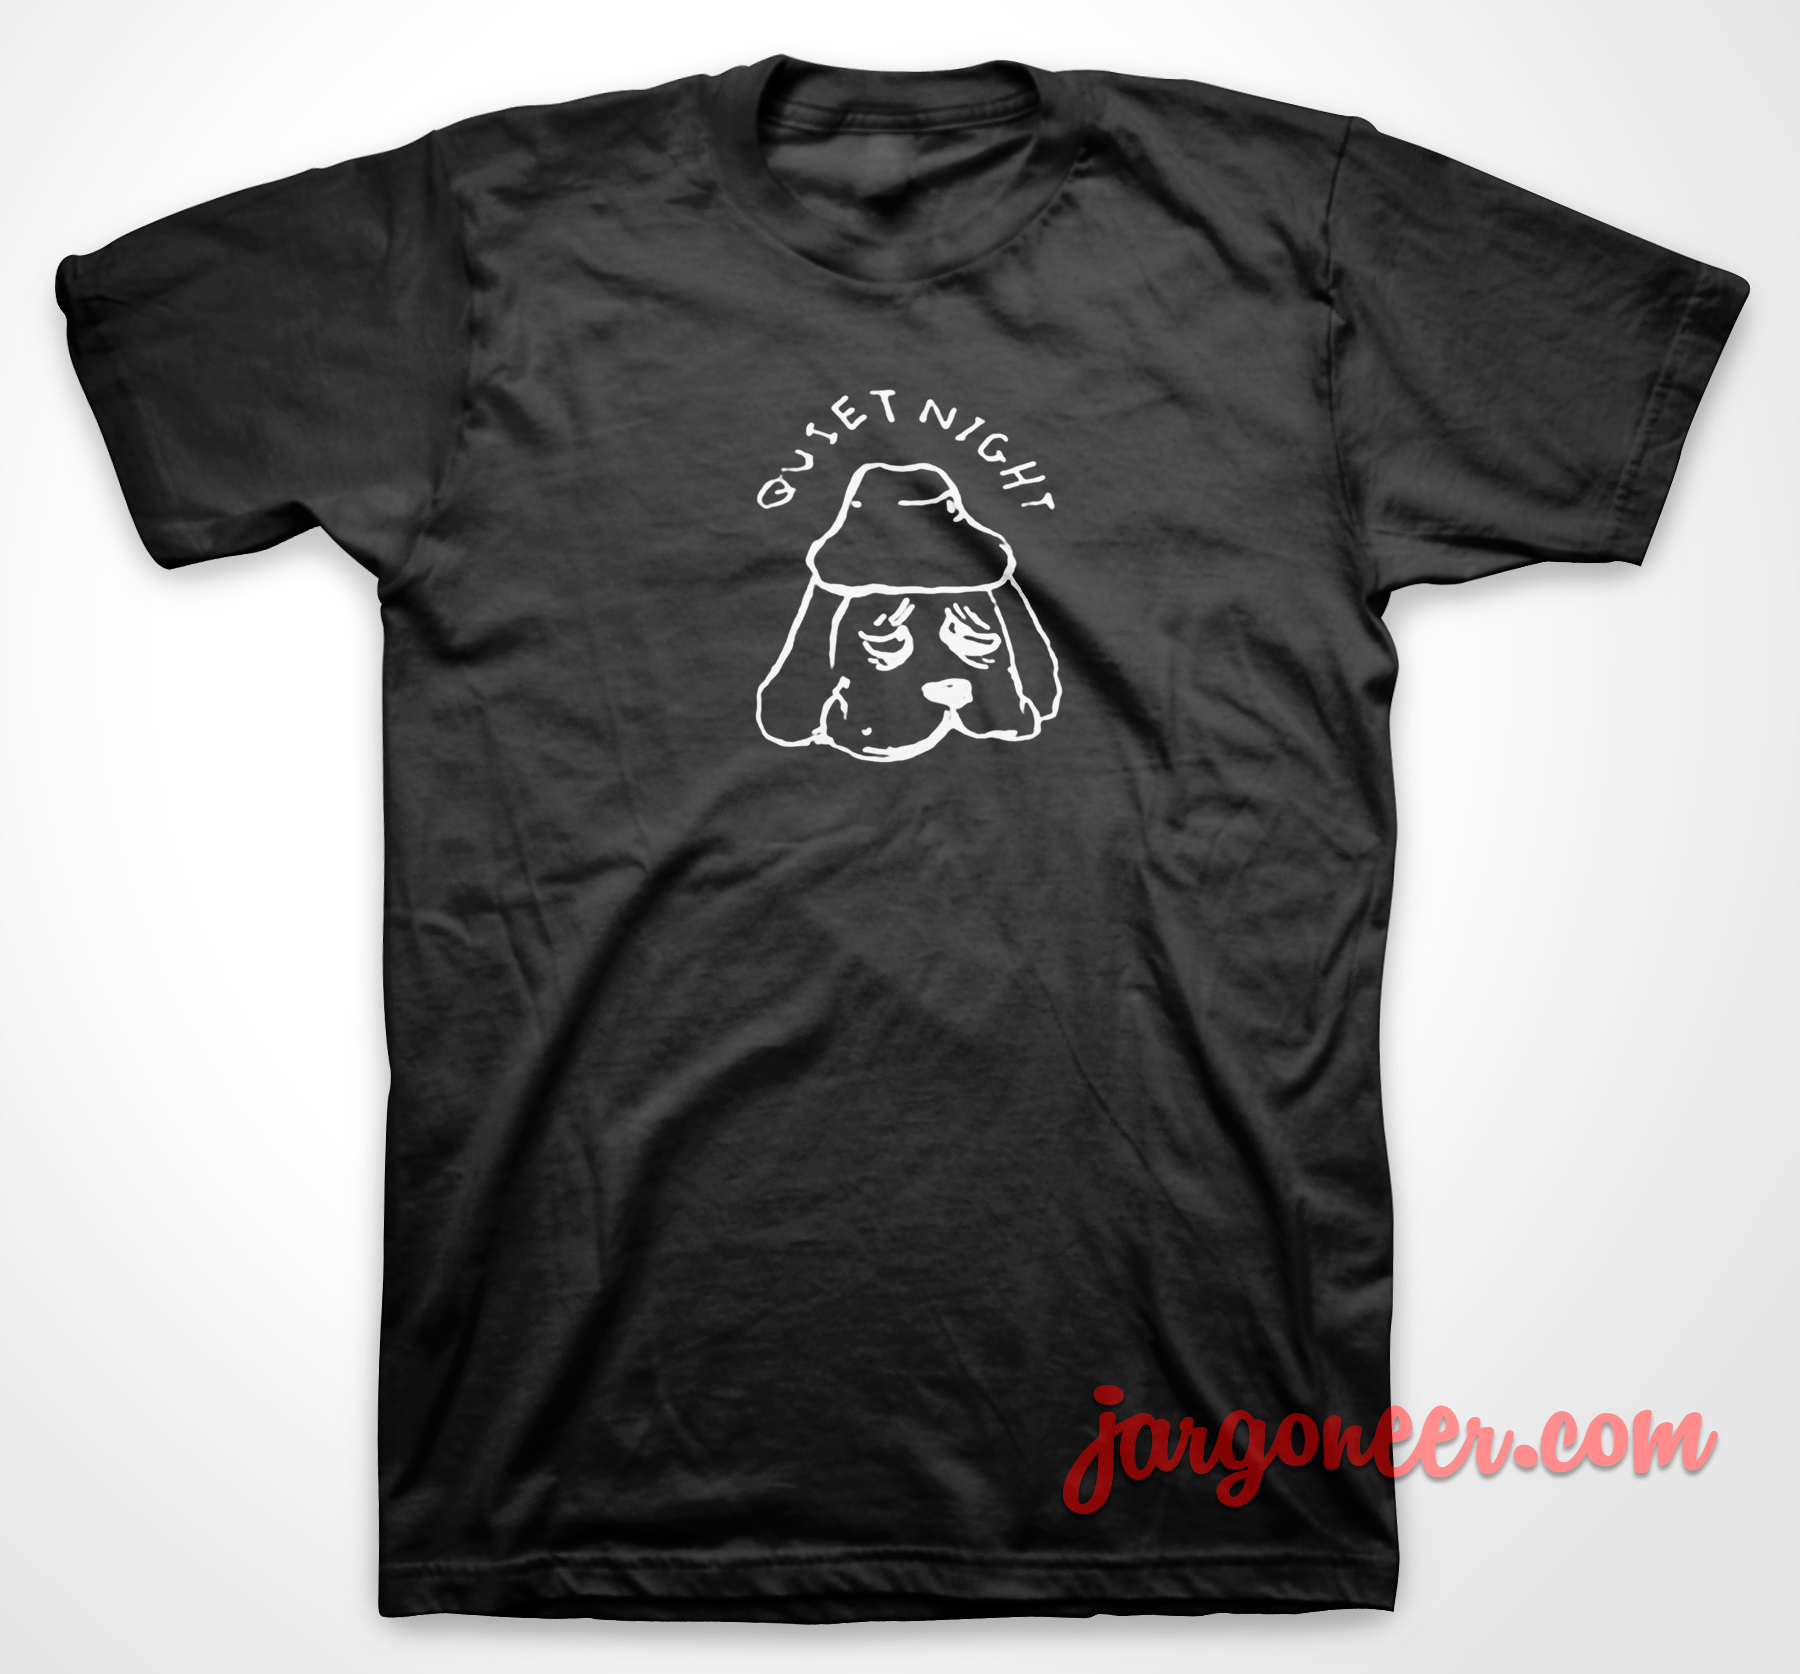 Quite Night Dog 3 - Shop Unique Graphic Cool Shirt Designs